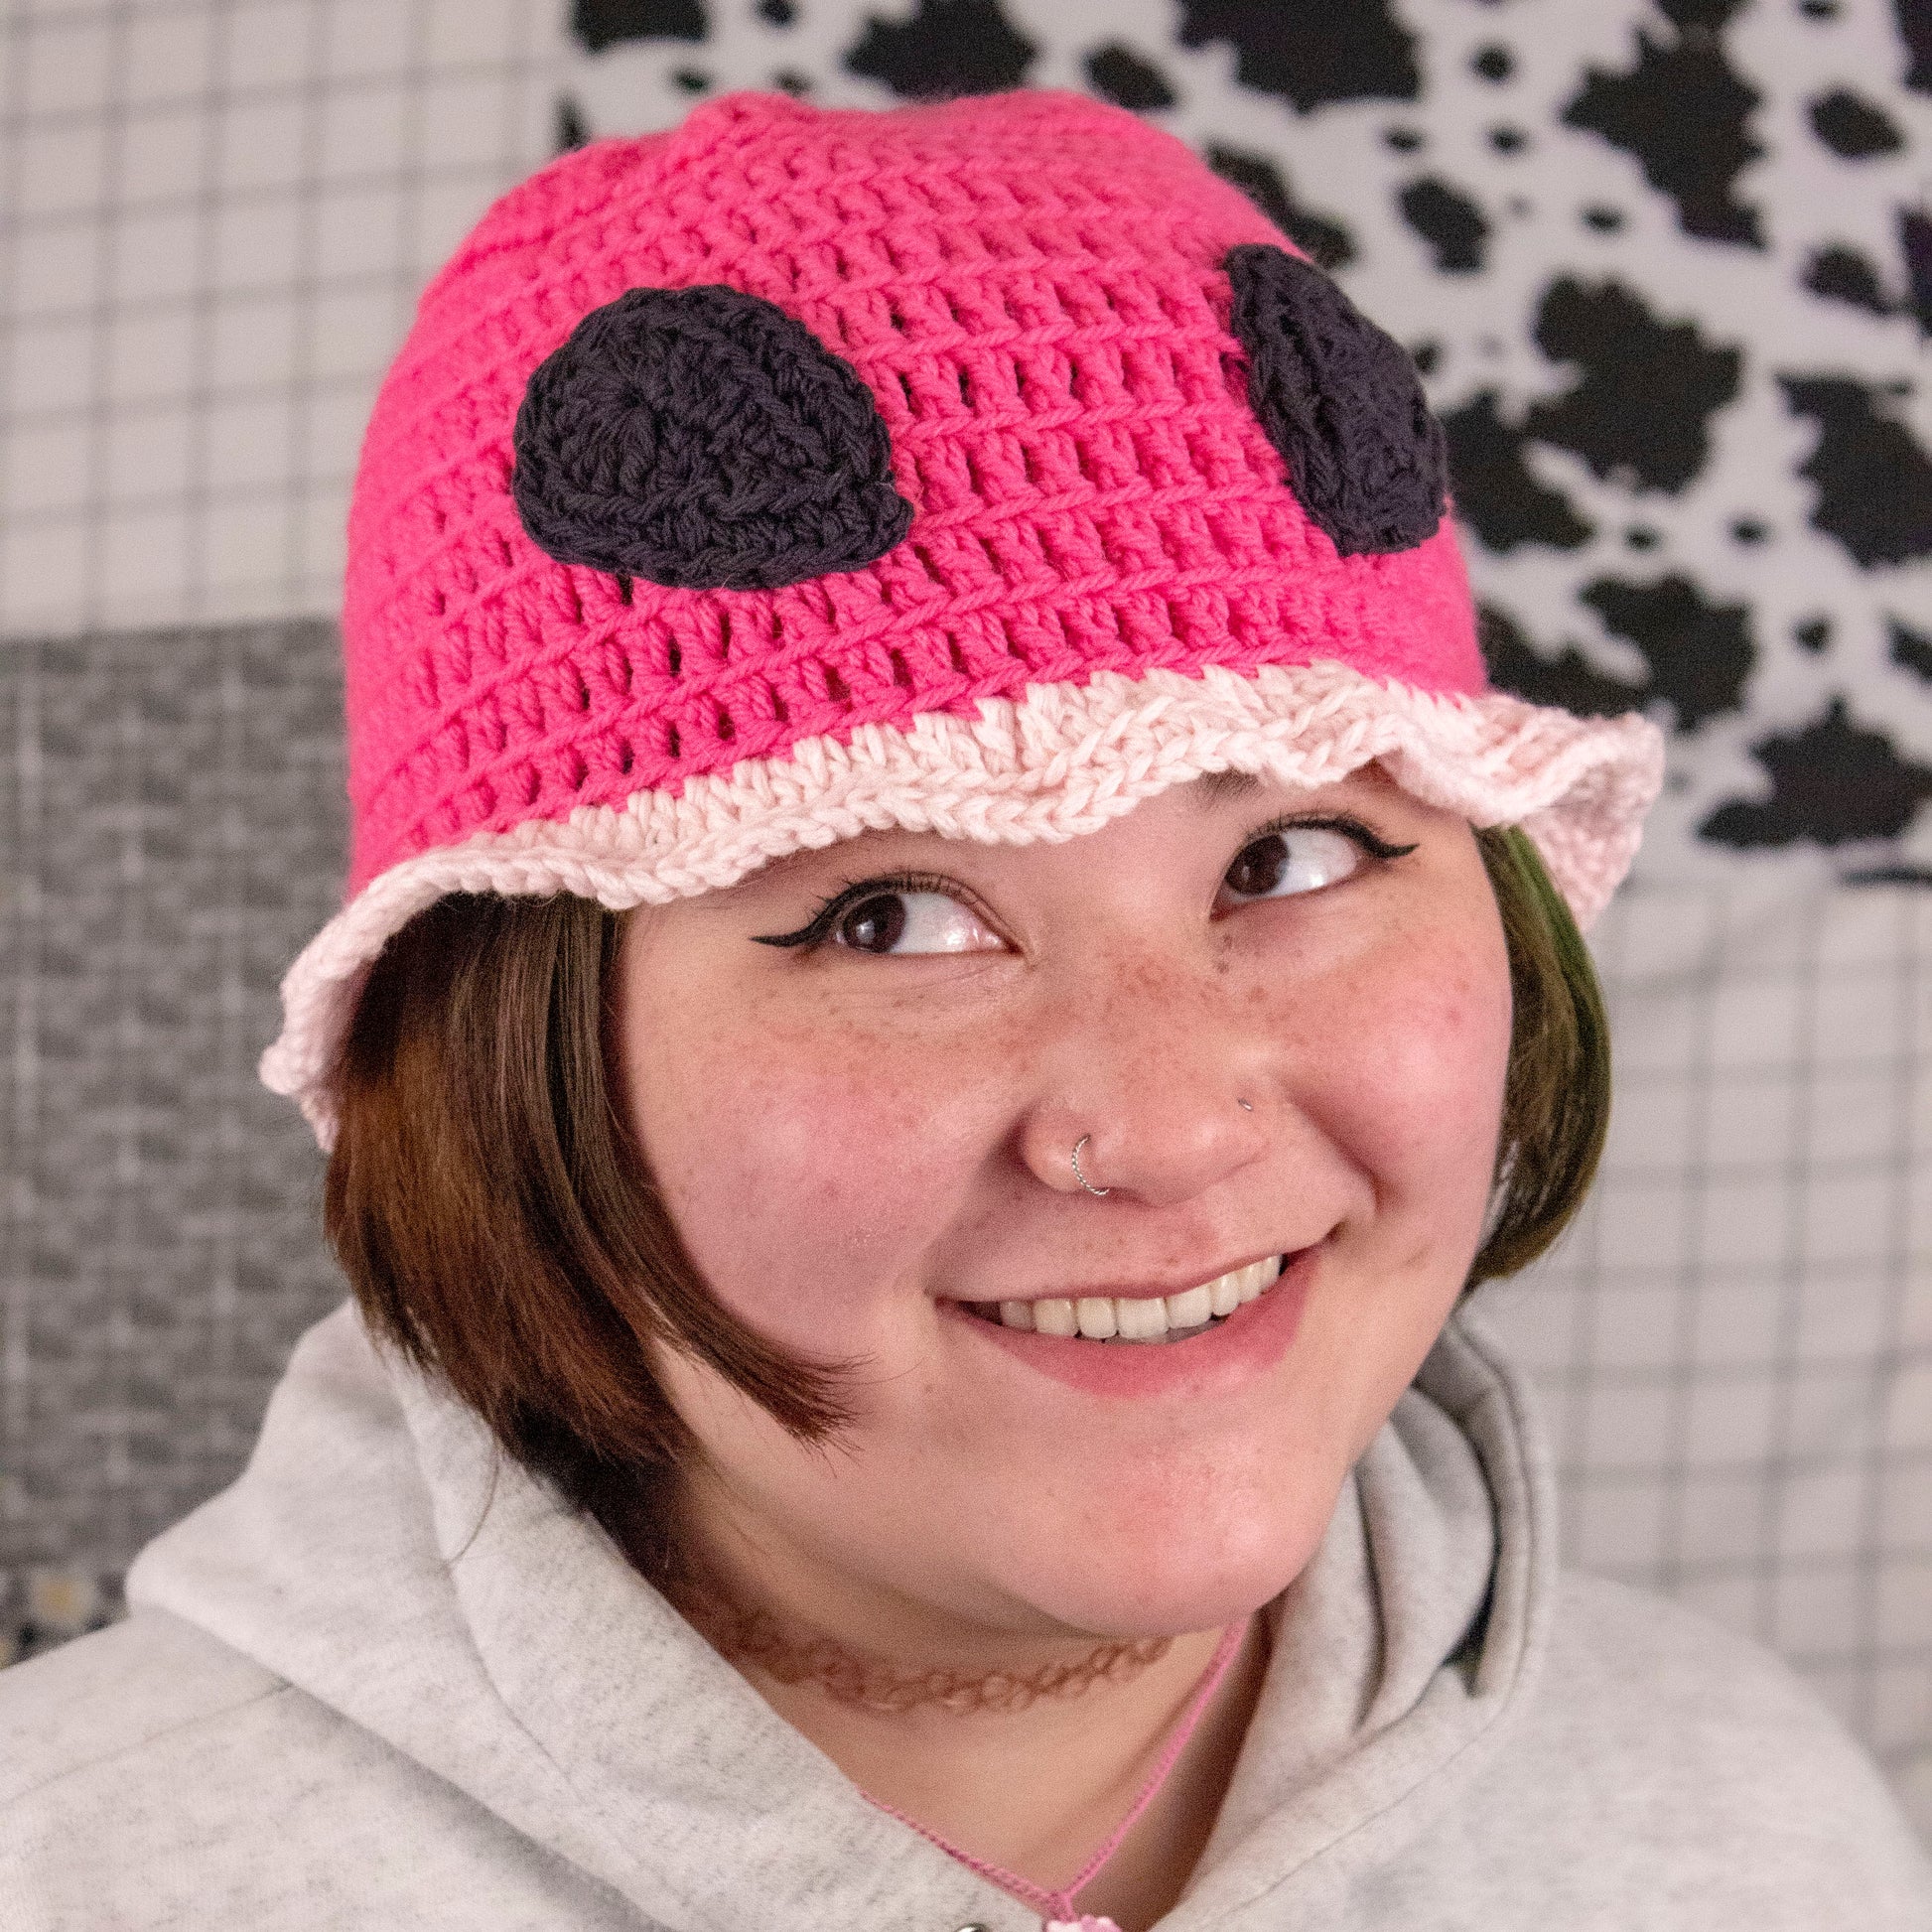 Beginner's Crochet Hat Kit - Choose Your Color